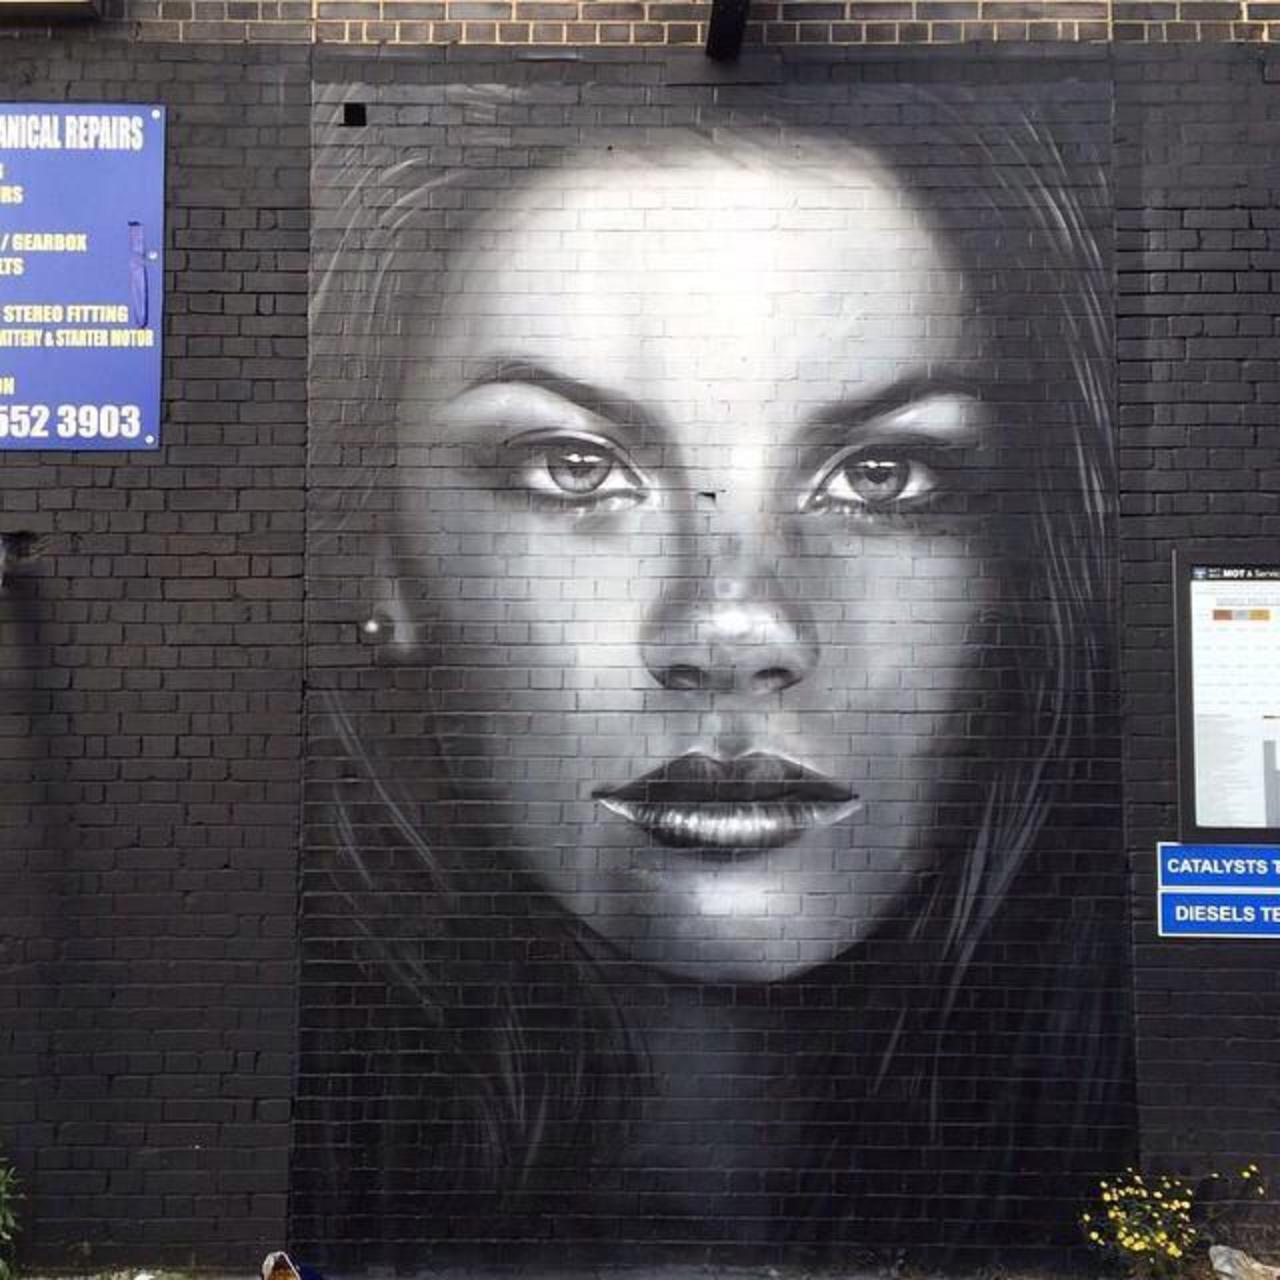 RT @DlgermanyDavid: Amazing #art by Christina Angelina #streetart #urbanart #mural #graffiti via @cakozlem76 http://t.co/I0tRuI1oIB http://t.co/yCpZiNRiB8